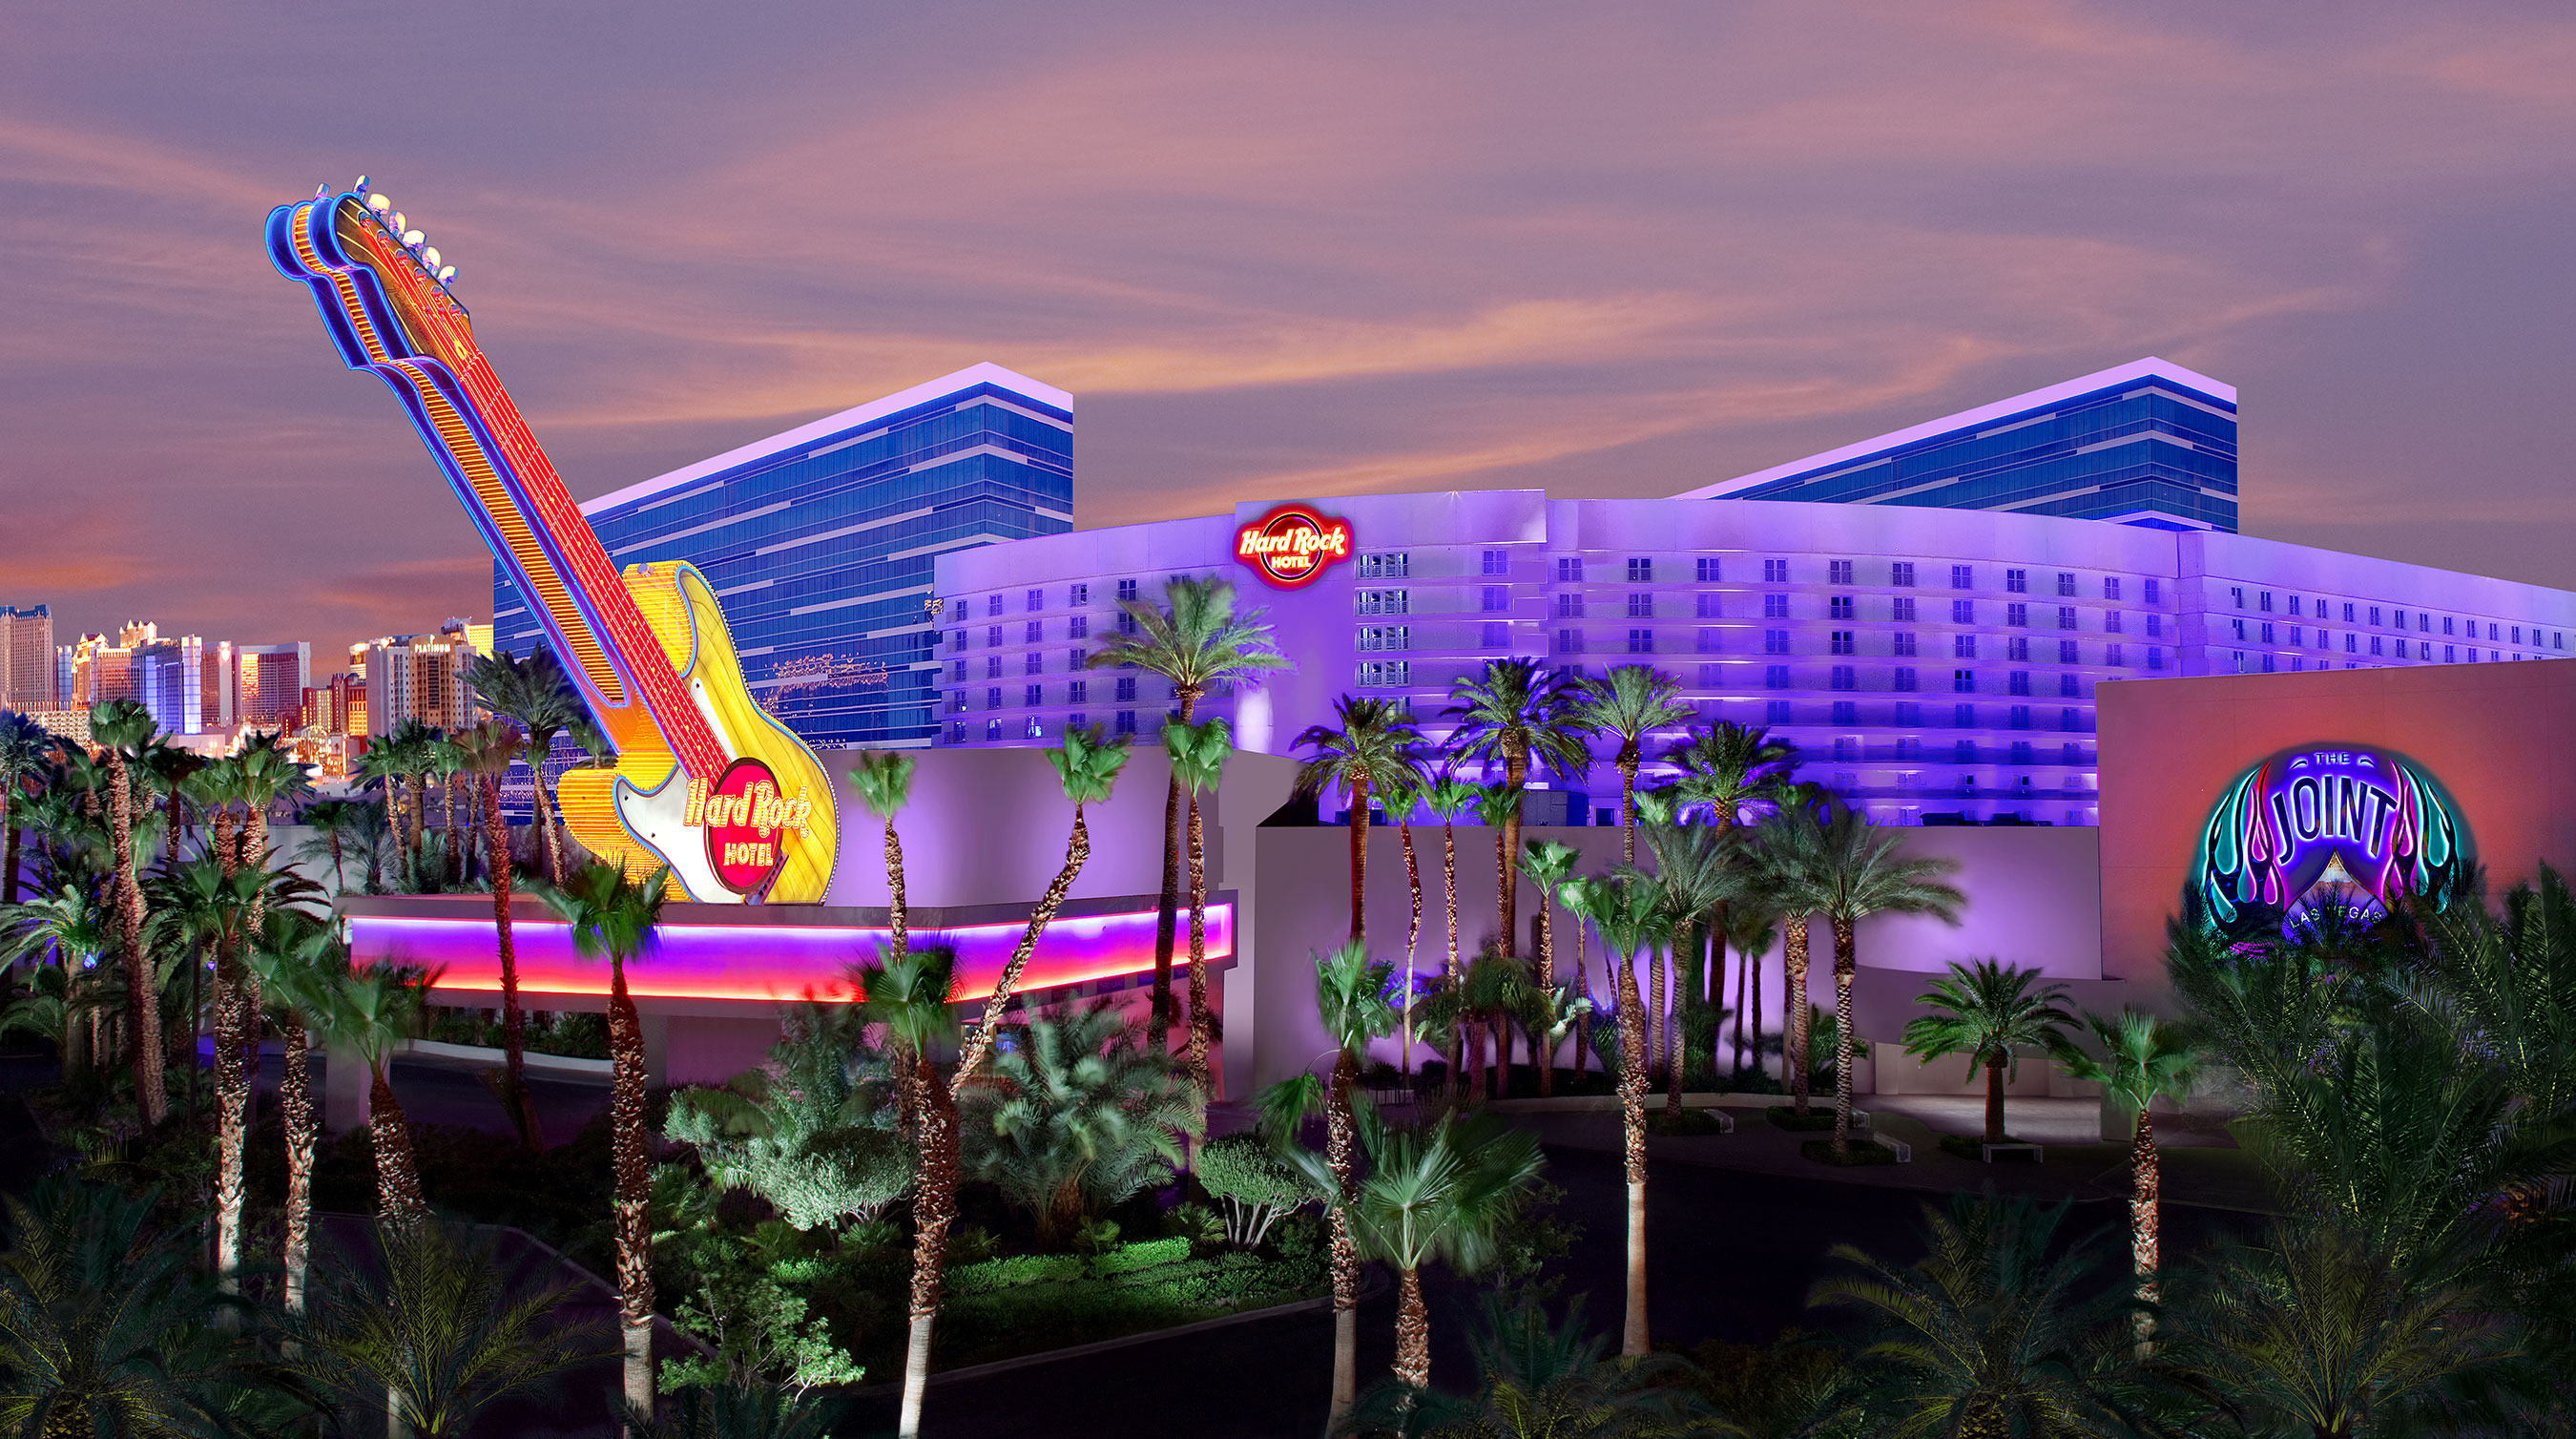 hard rock casinos locations in california